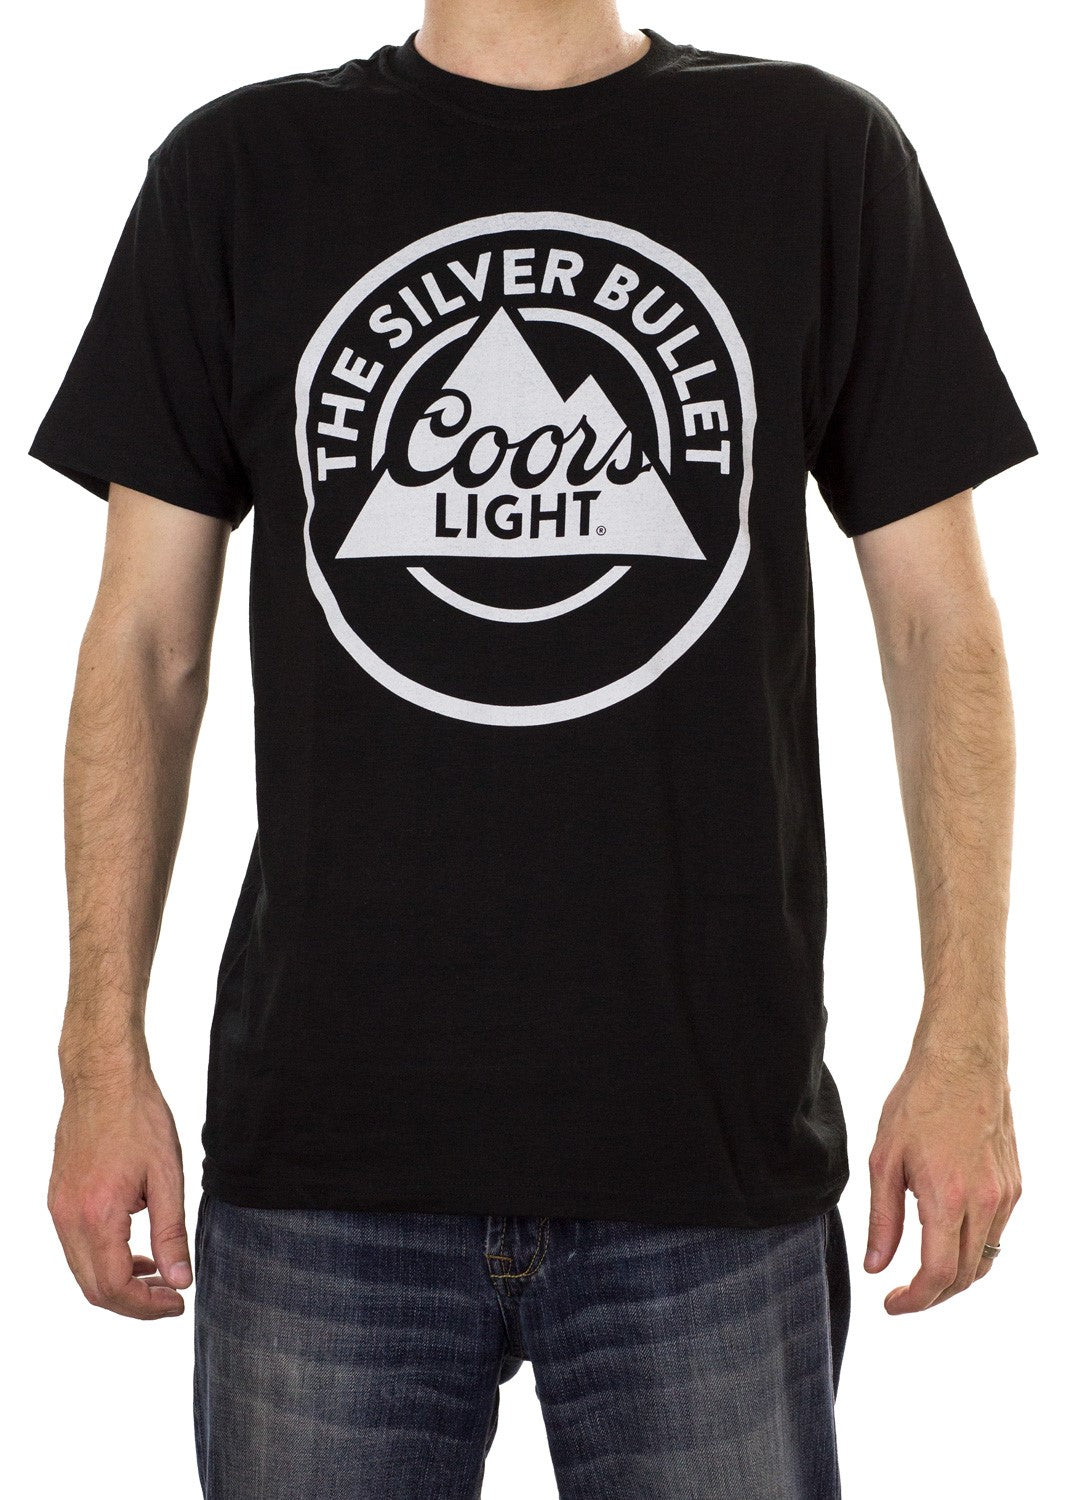 Coors Silver Bullet Classic Logo T-Shirt